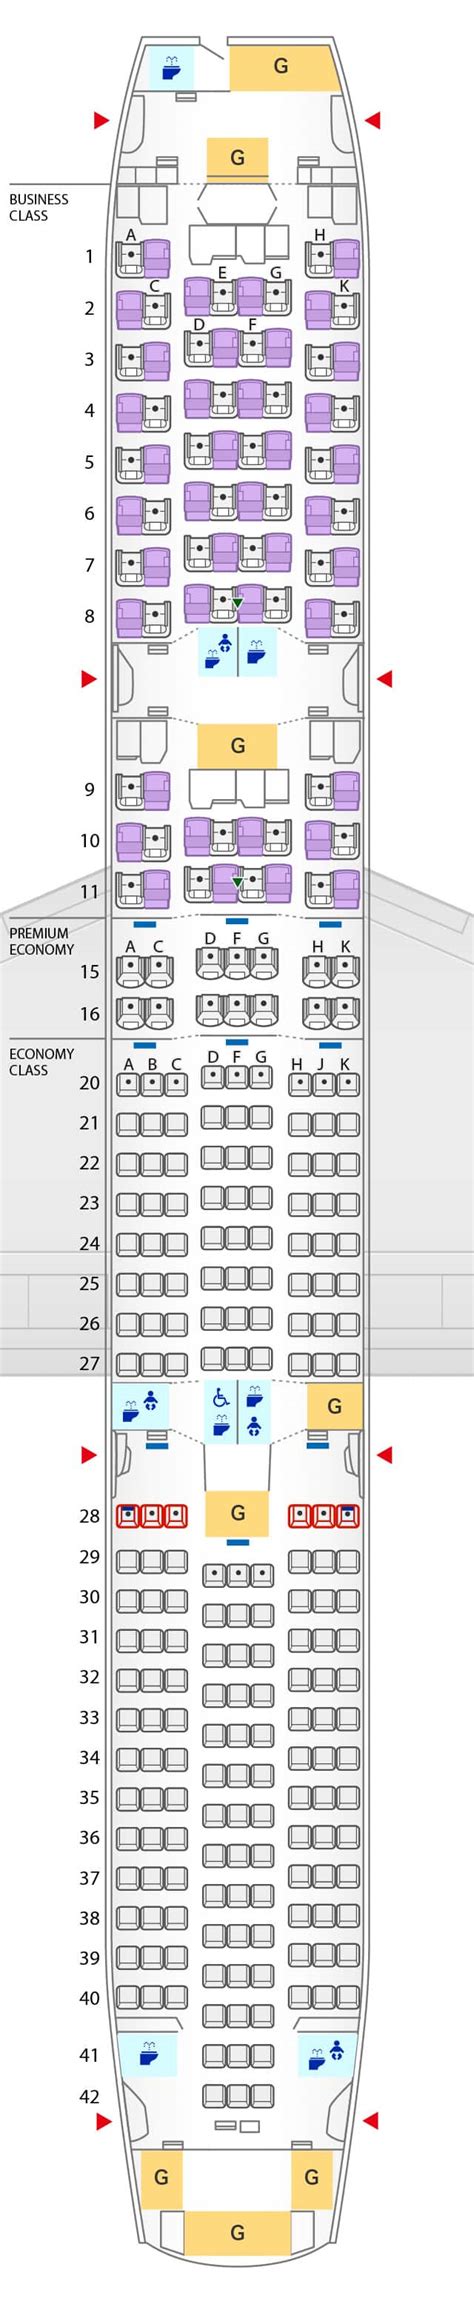 boeing 787-9 widebody seat map